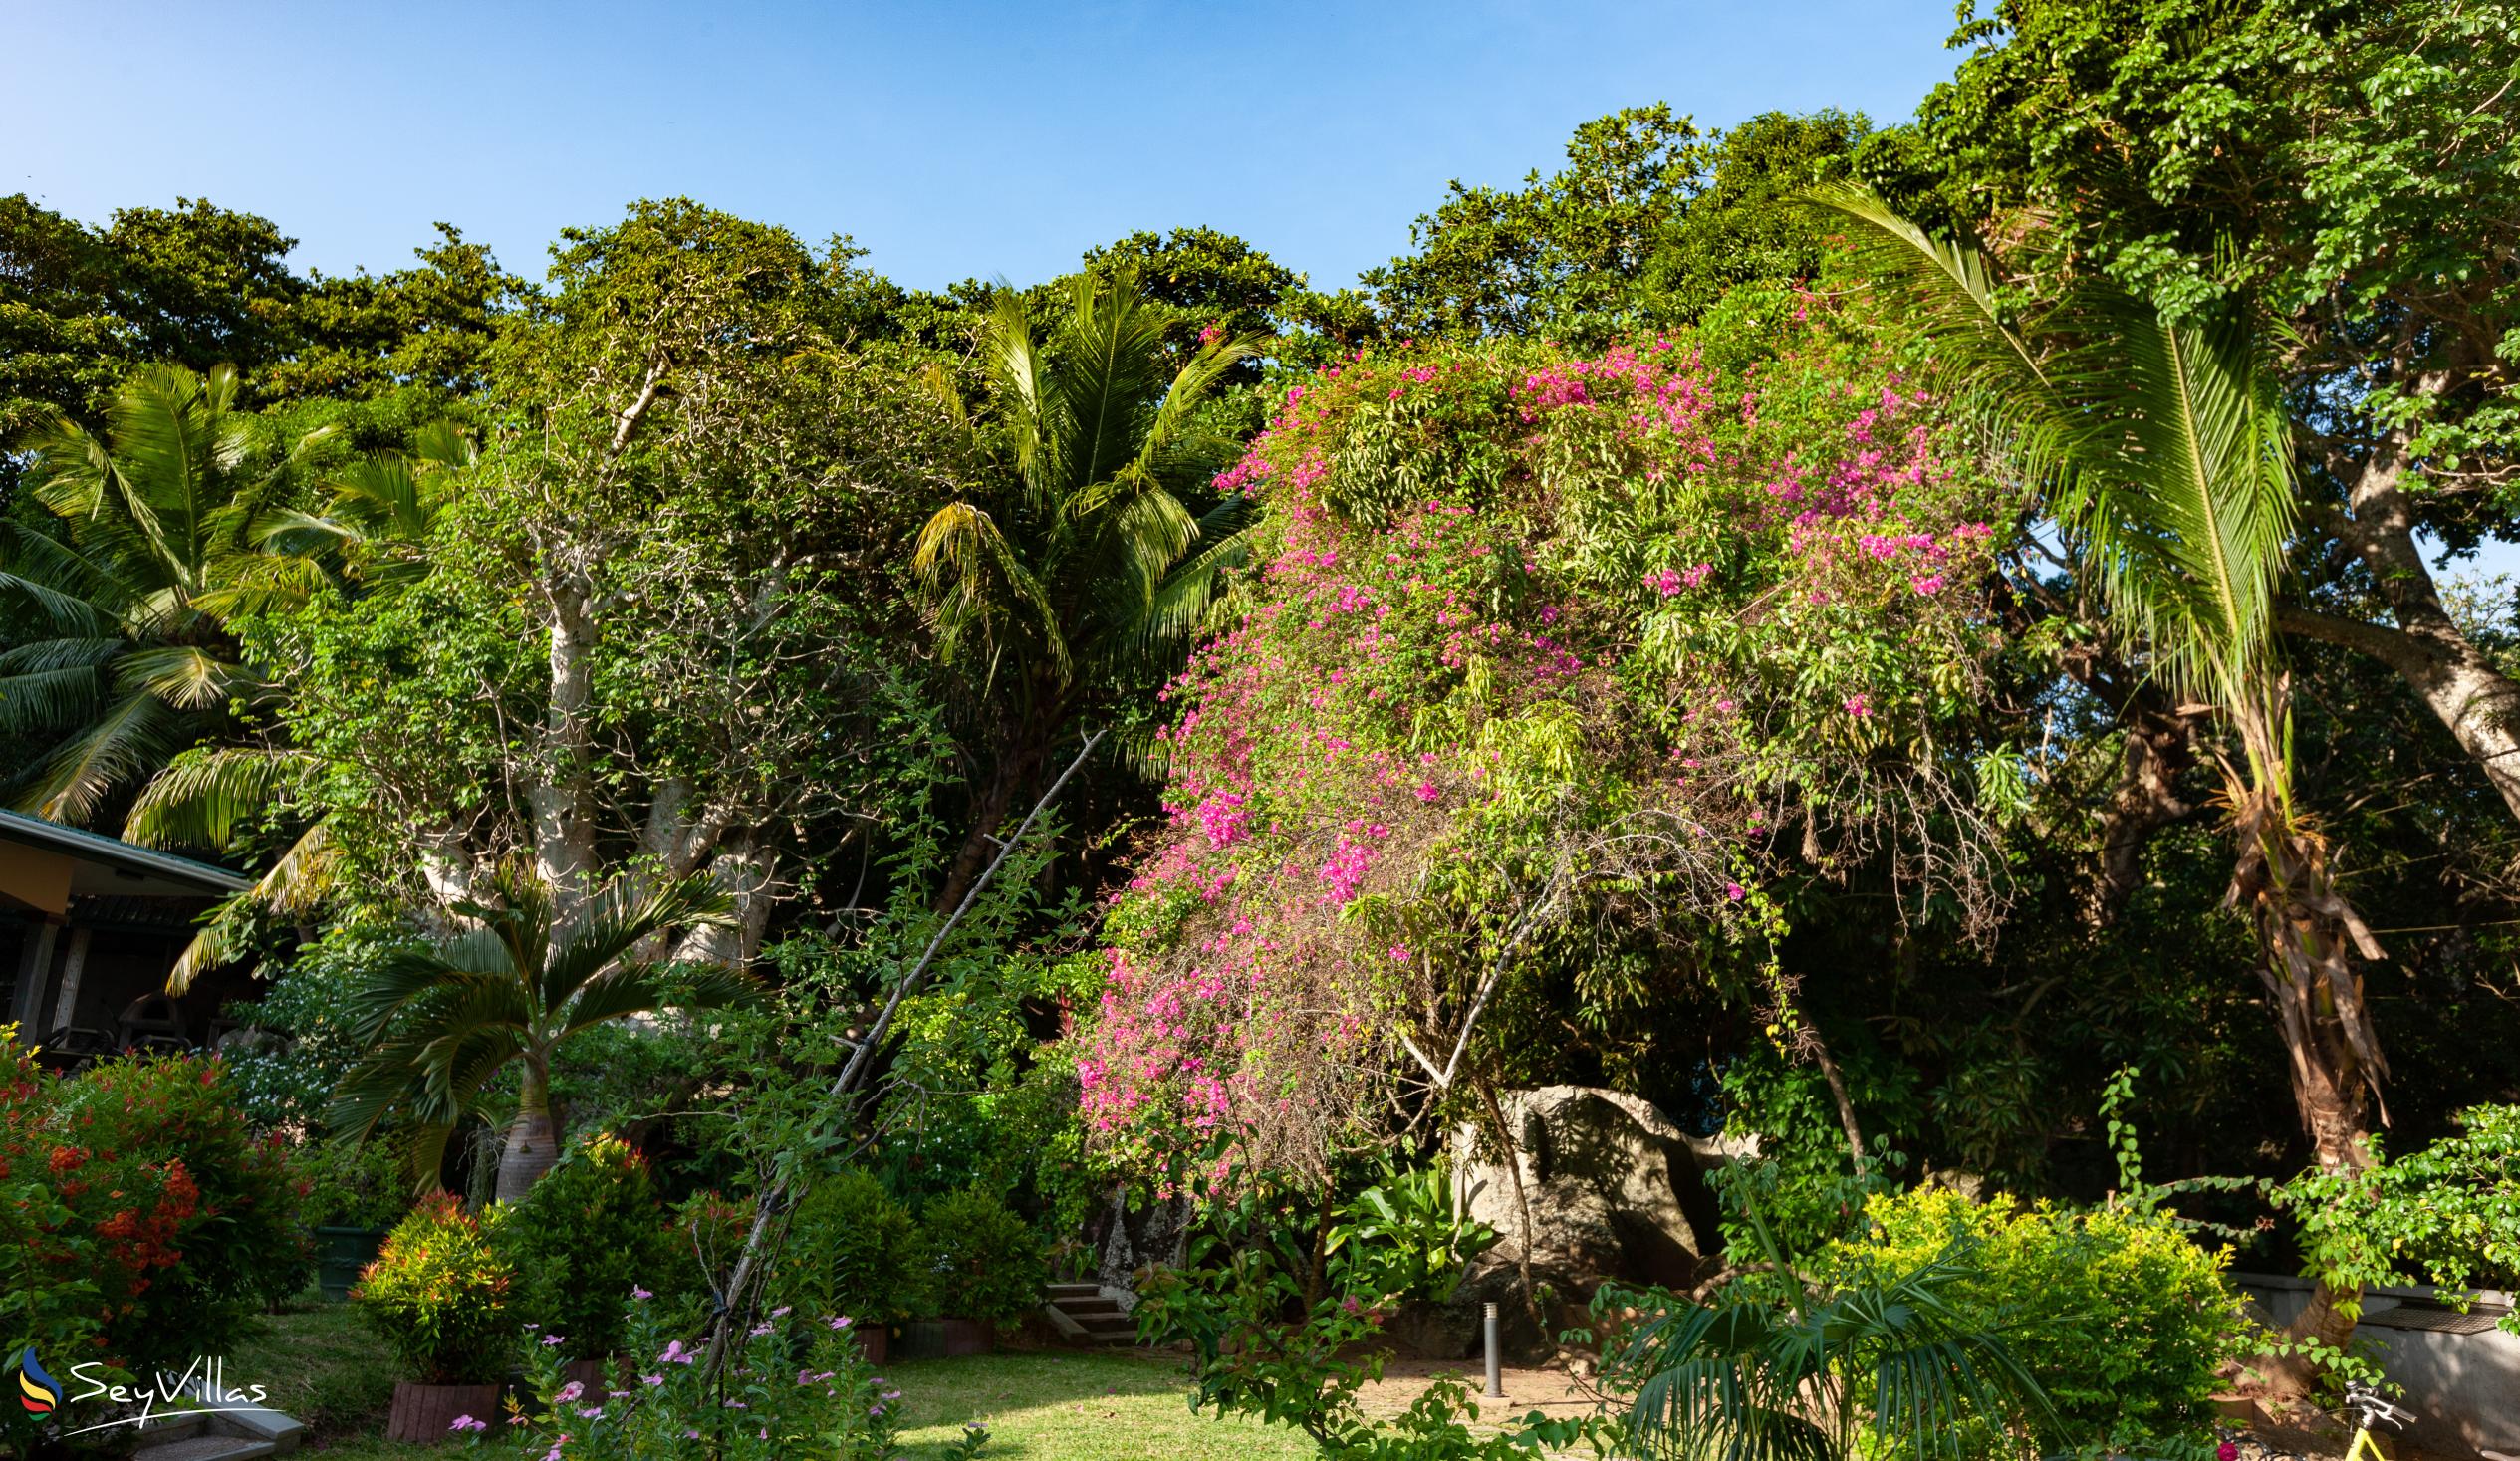 Photo 8: Pension Michel - Villa Roche Bois - Outdoor area - La Digue (Seychelles)